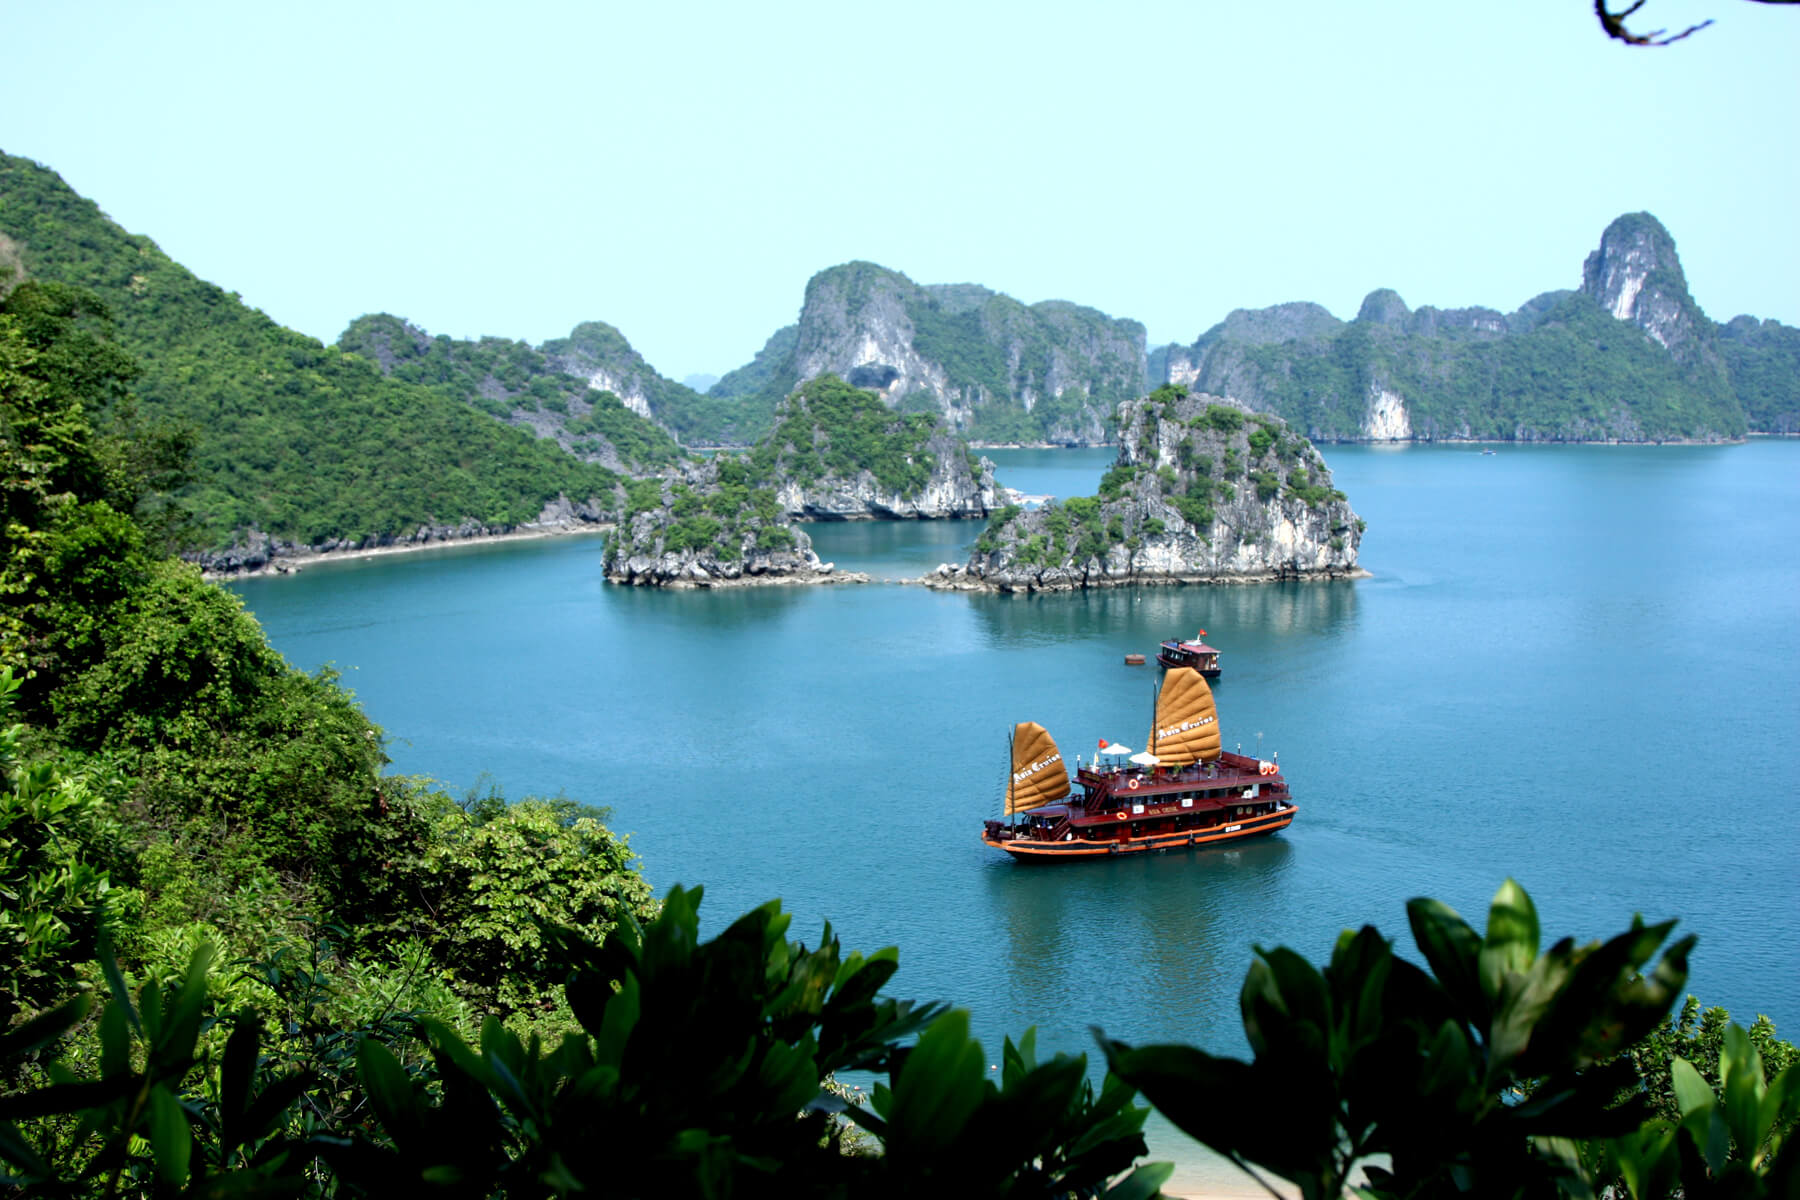 Tour du lịch Hạ Long của Viet Bamboo Travel 2022/2023 174763